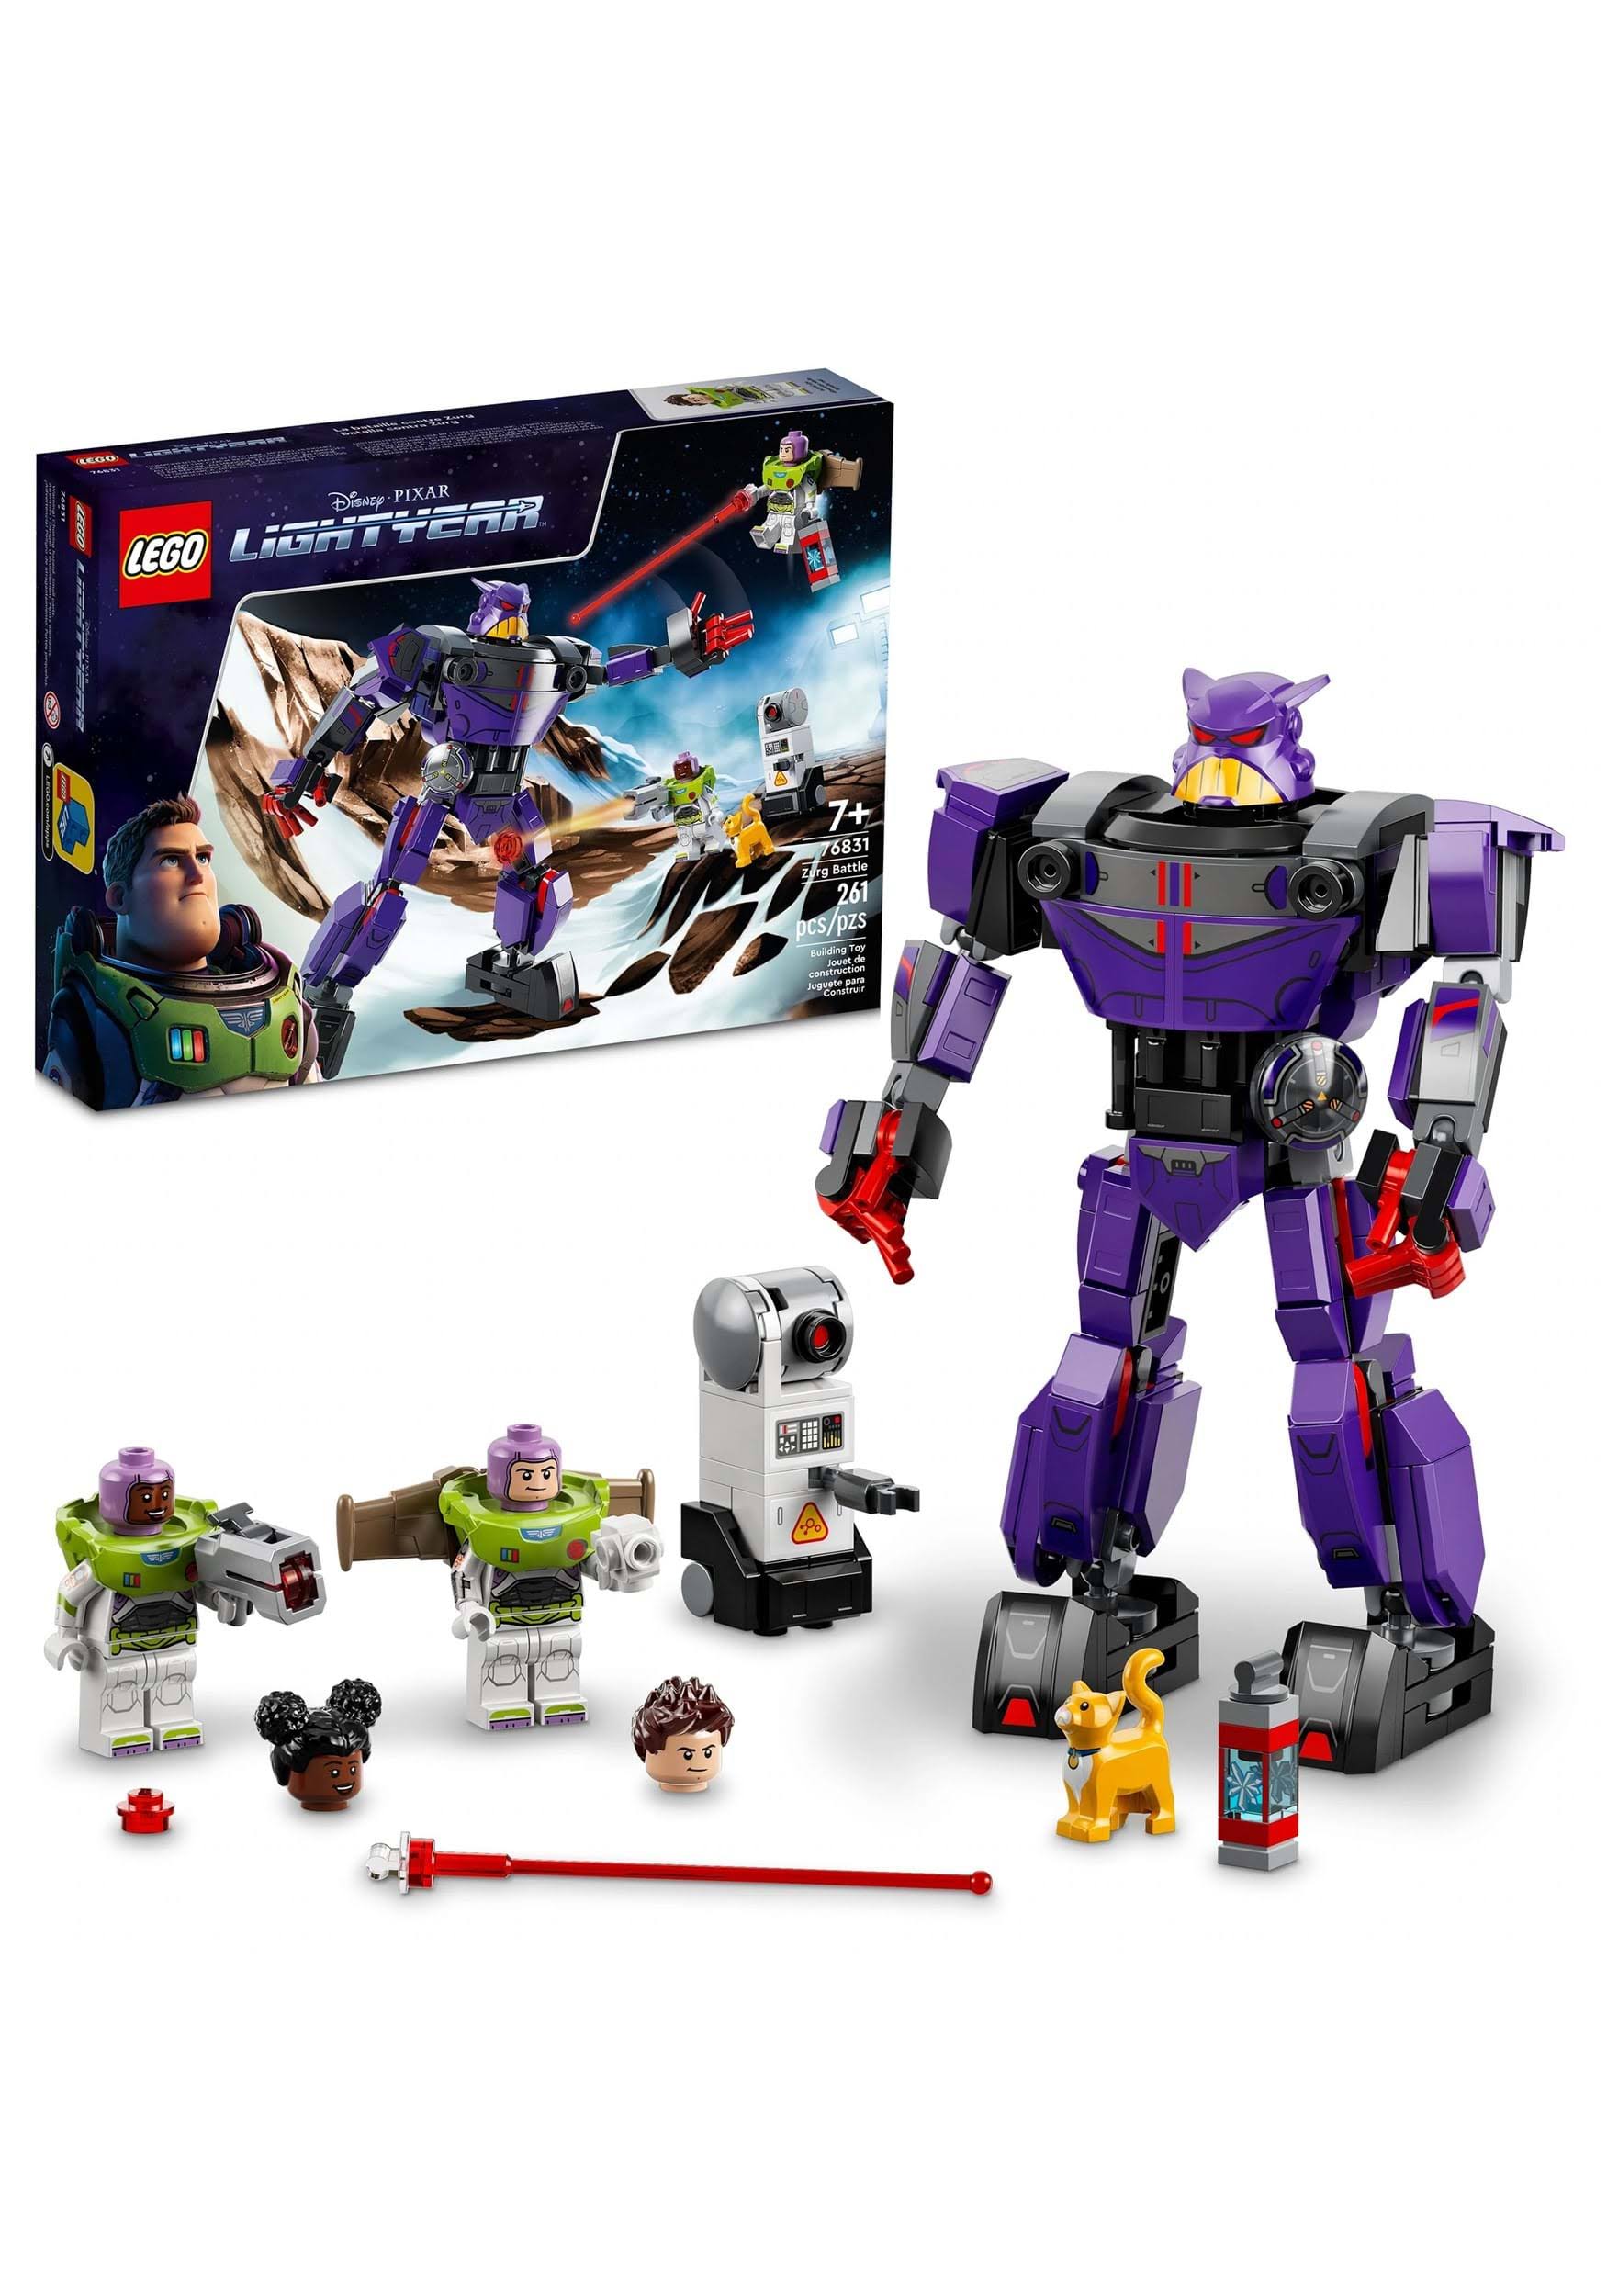 LEGO Disney and Pixar’s Lightyear Zurg Battle Buzz Set (76831)